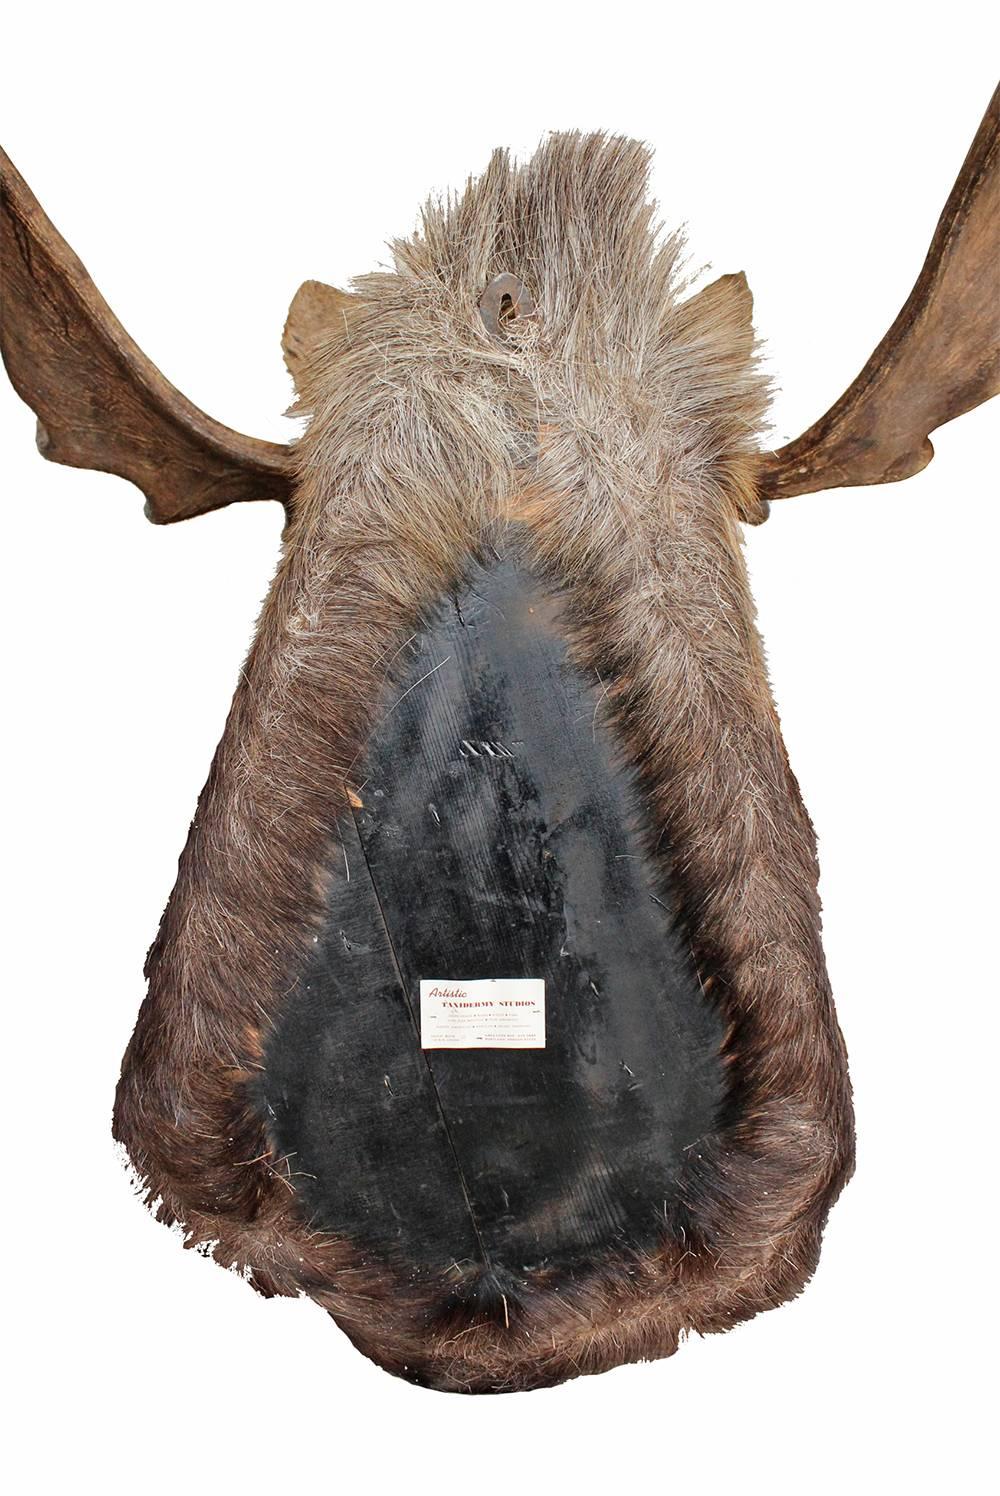 Vintage Taxidermy Moose Mount 1